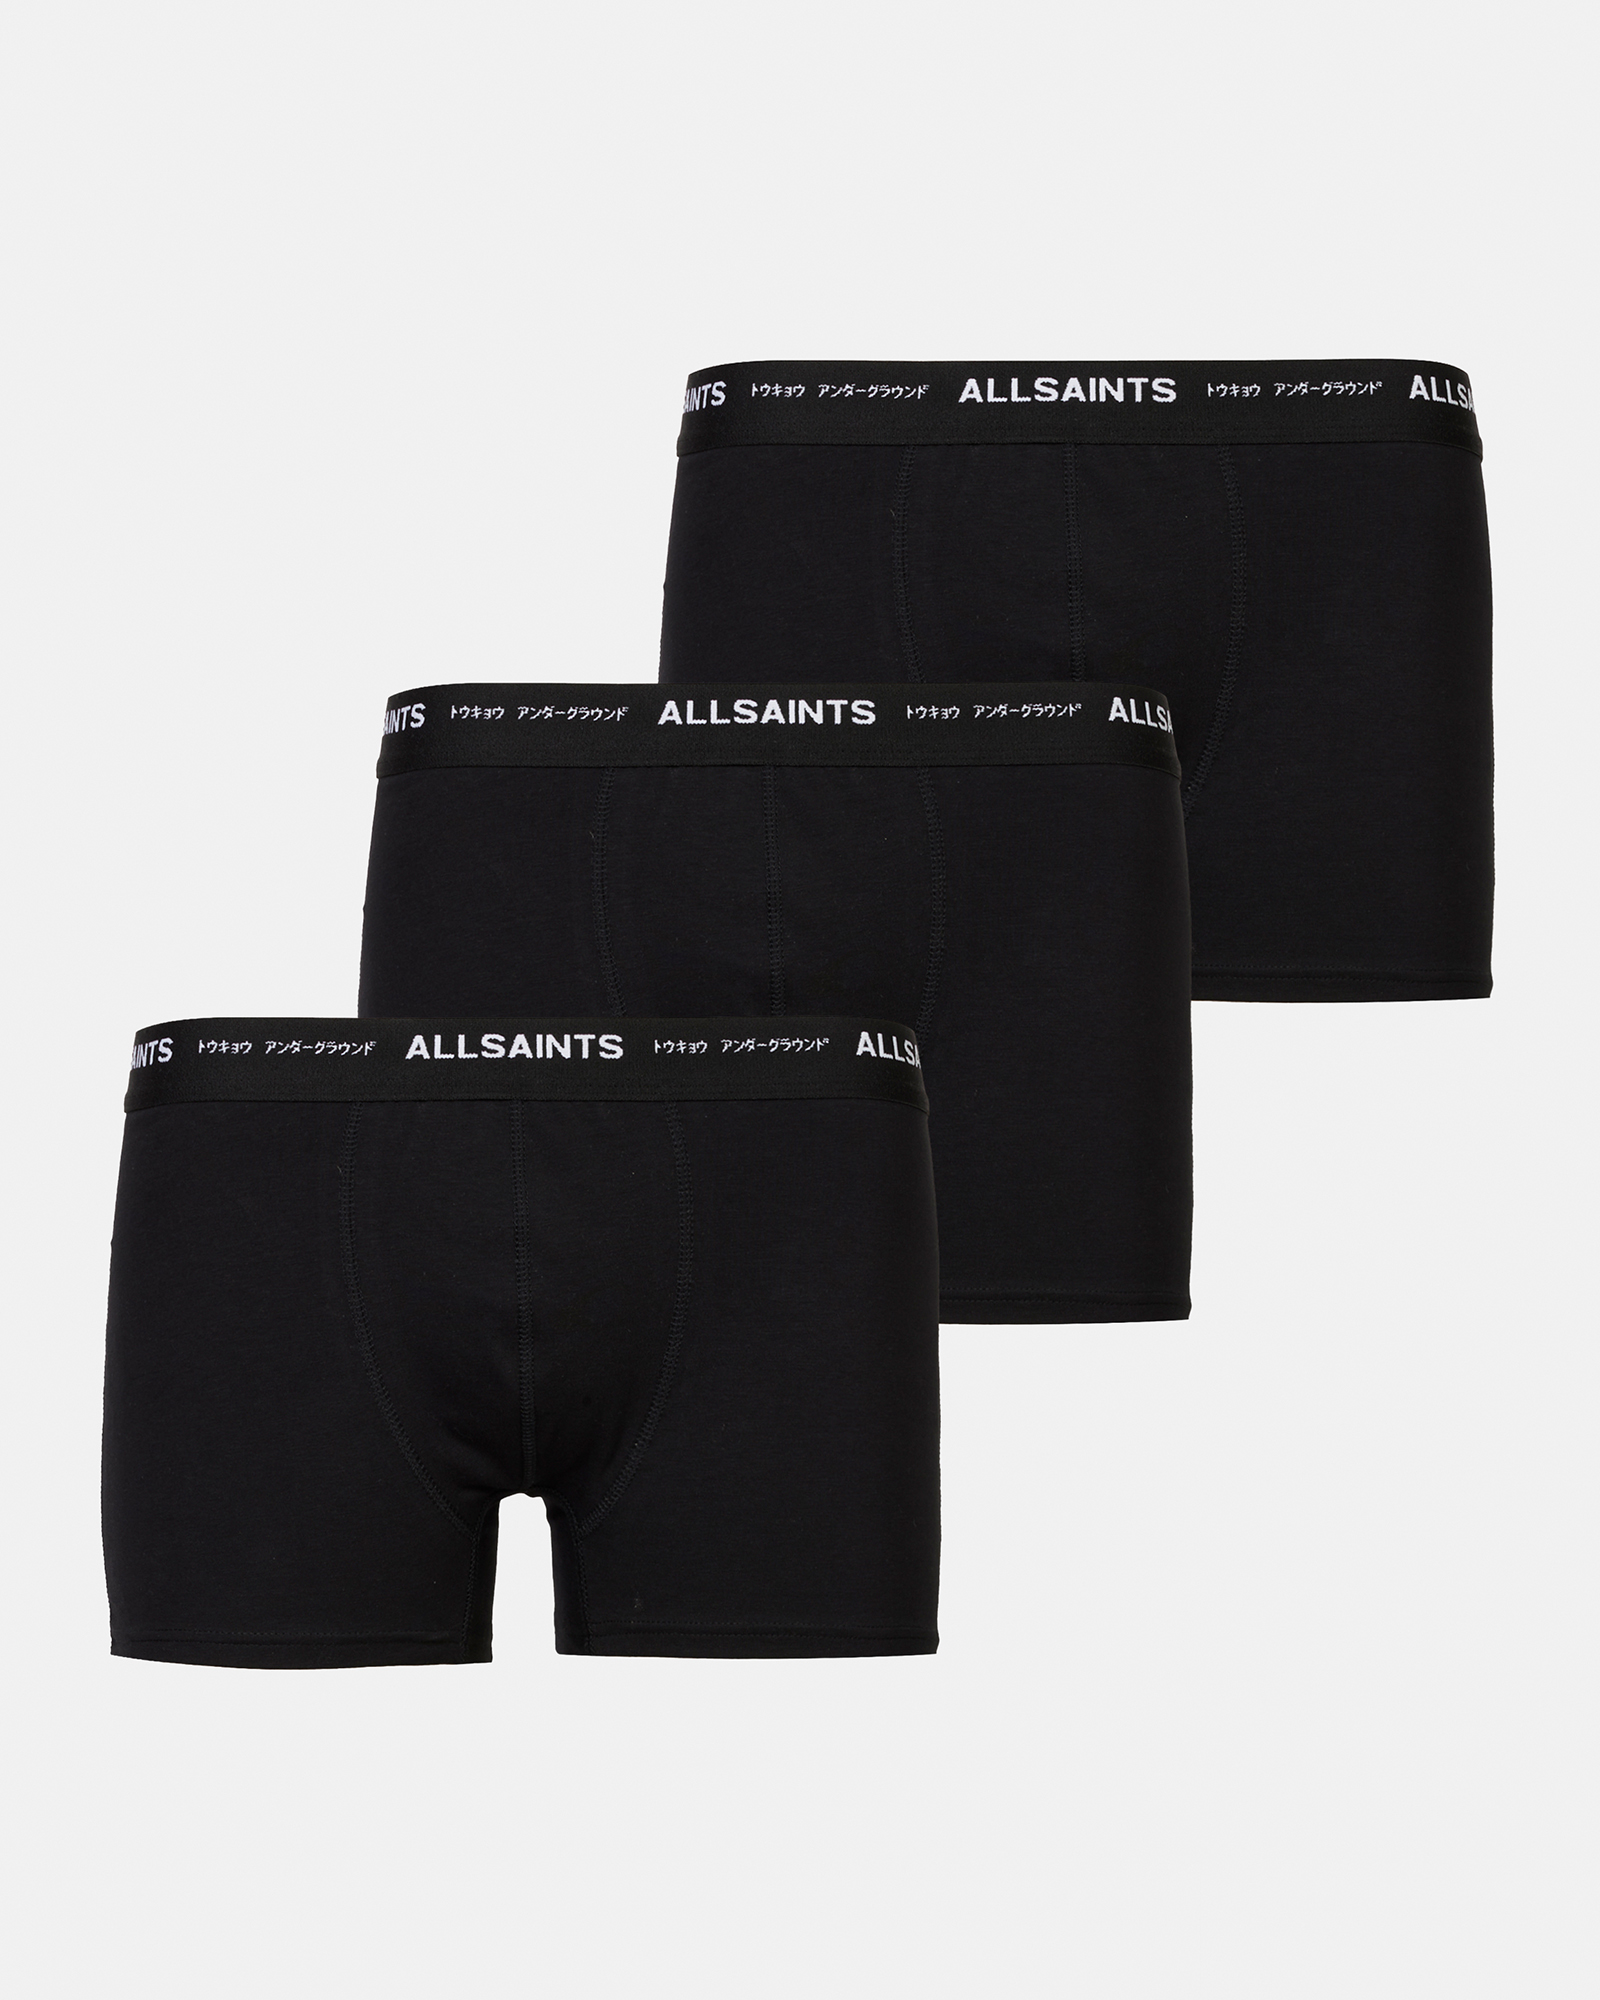 AllSaints Underground Logo Boxers 3 Pack,, BLACK/BLACK/BLACK